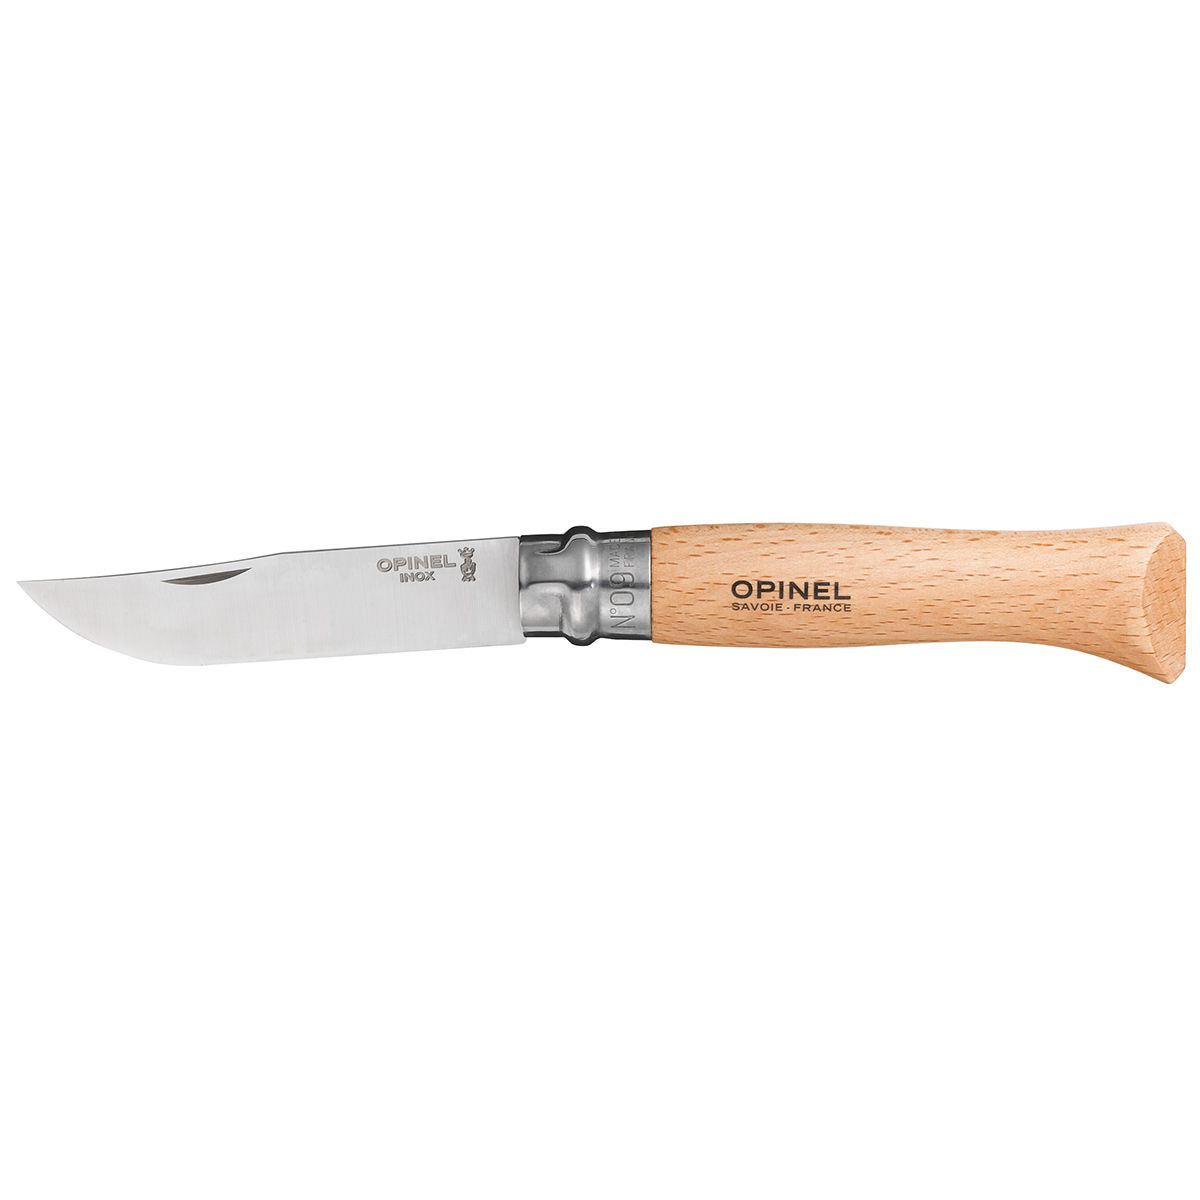 Opinel knife n°9 - Tradition 9 cm - Stainless steel, beechwood